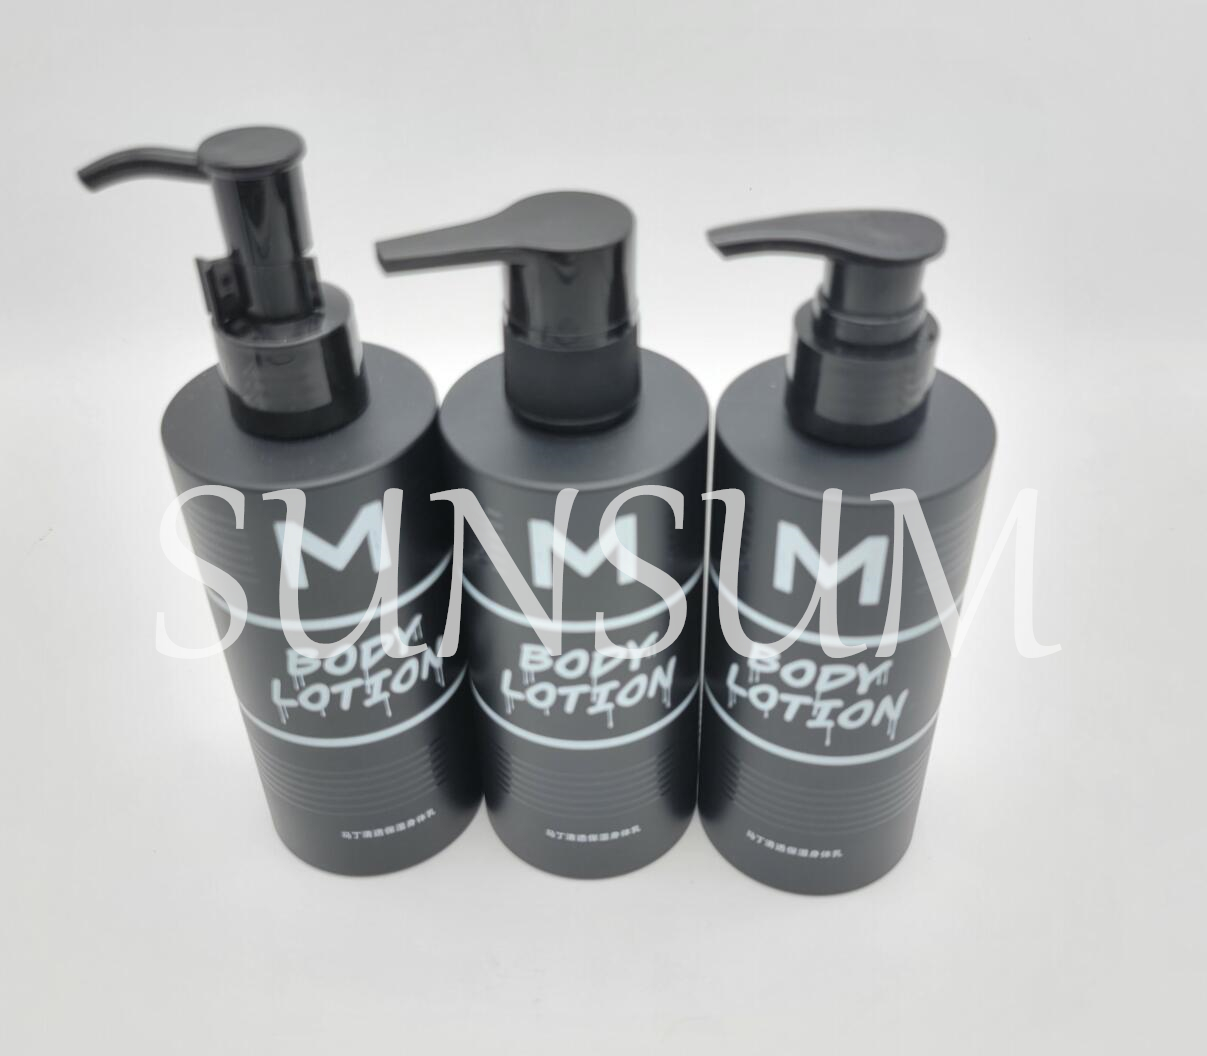 Matt Black Pet Plastic 500ml 250ml Body Lotion Bottle with Pump for Men